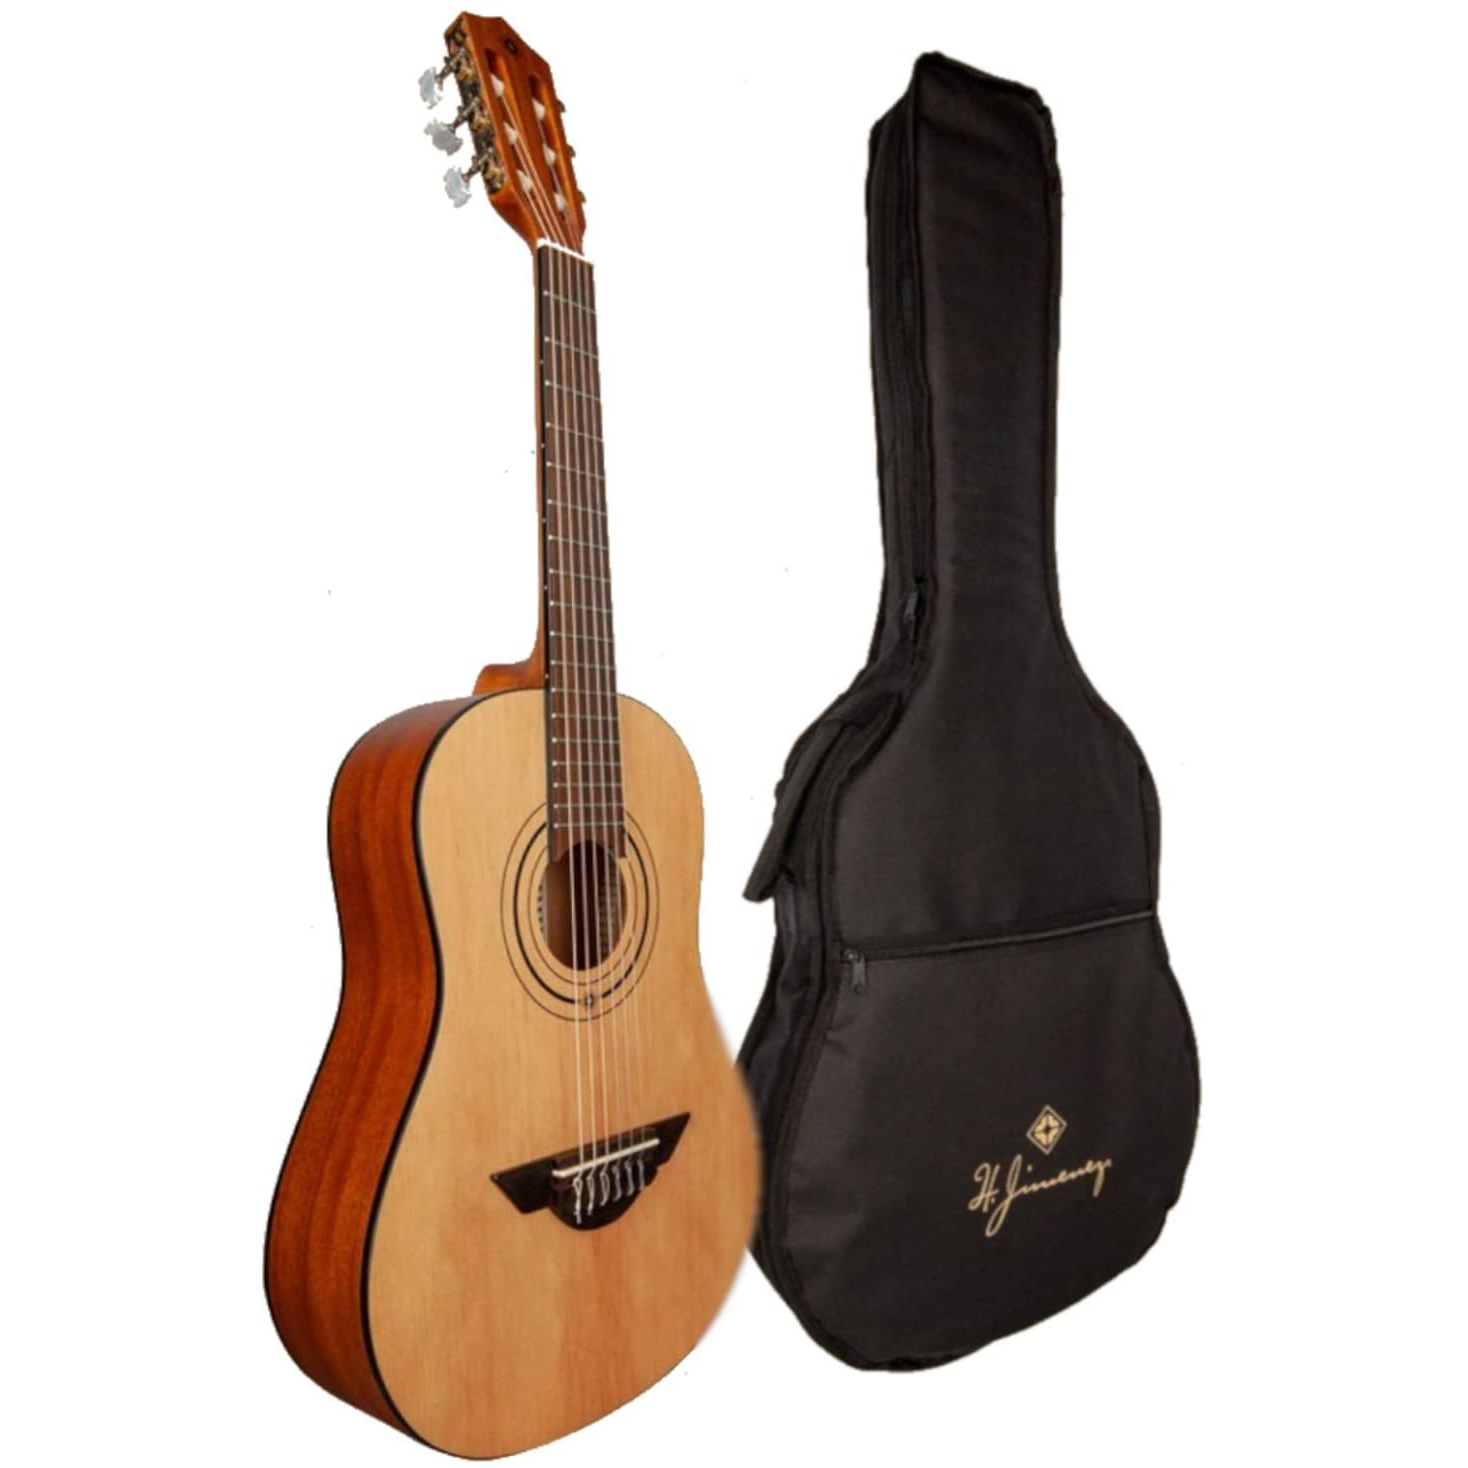 H Jimenez Educativo Series 1/2 Size Nylon String Guitar